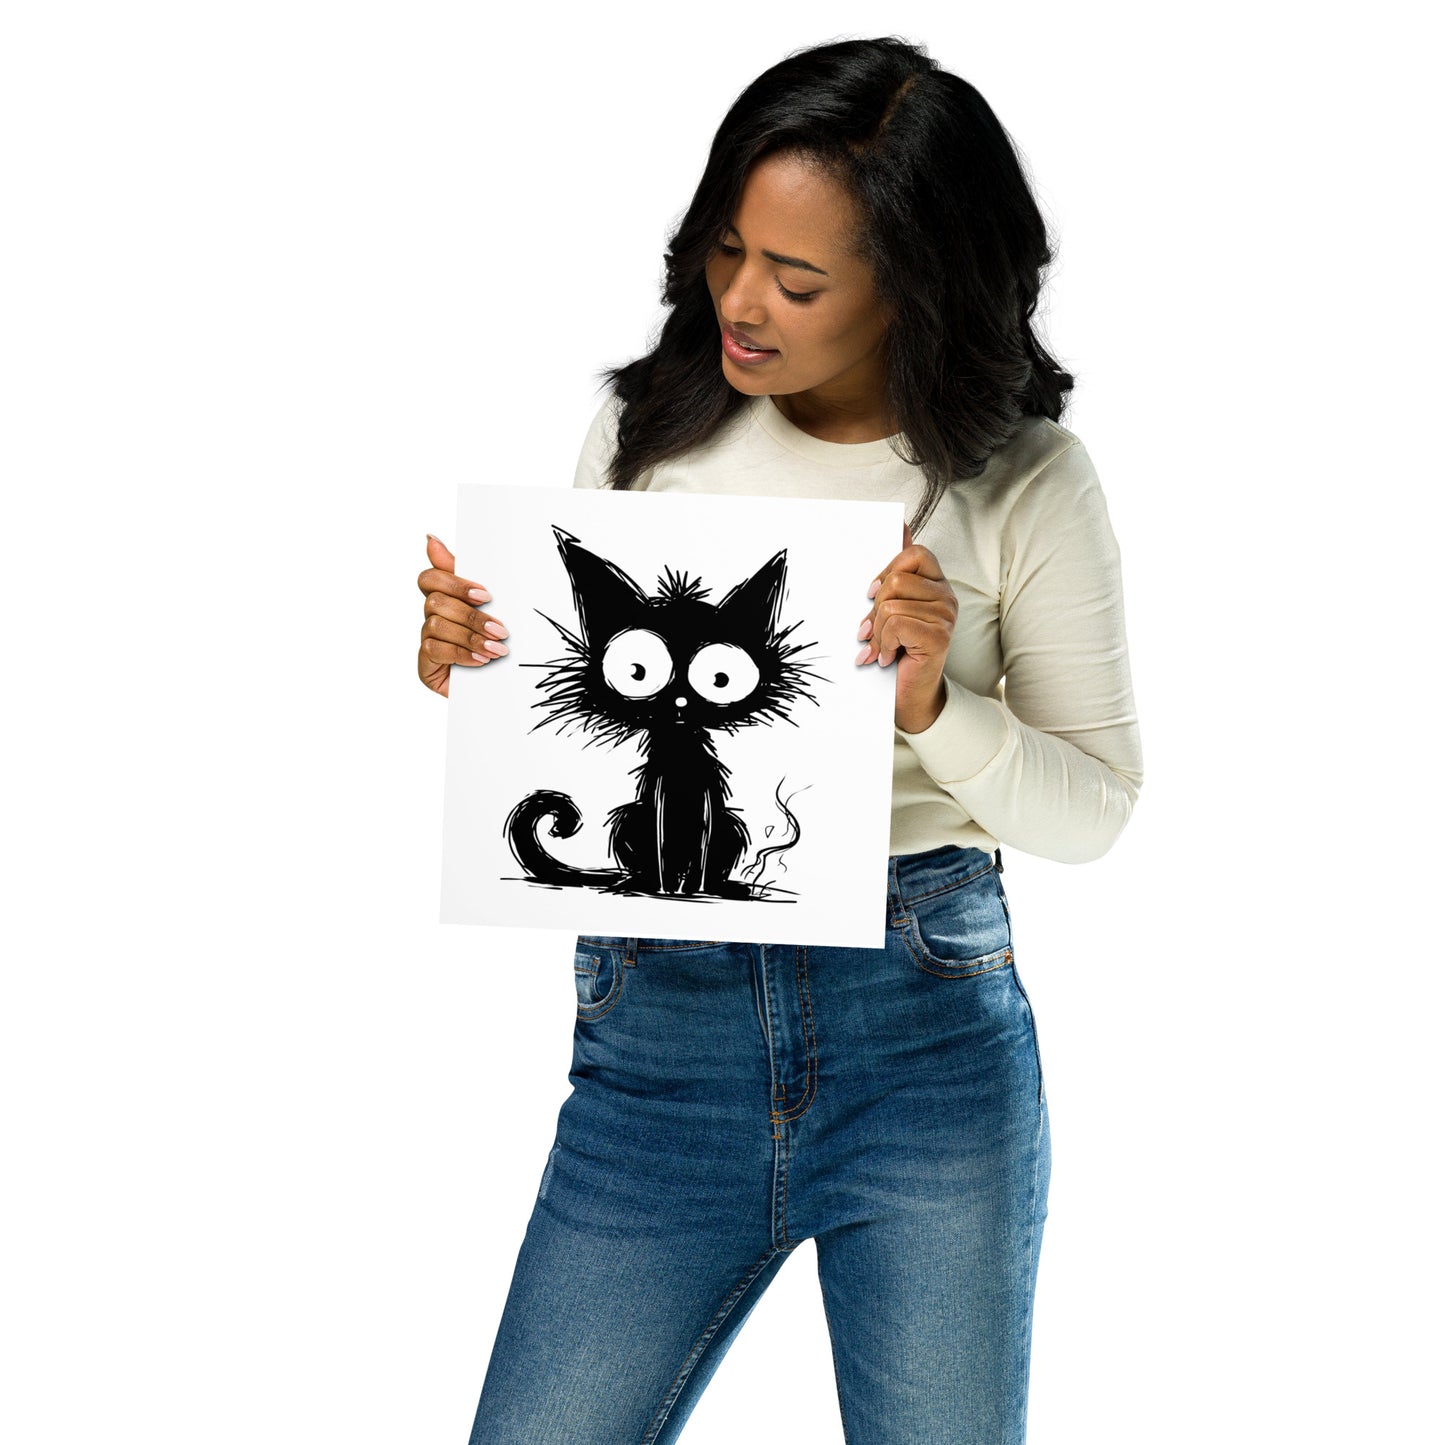 Grillige kattenkunst / Zwarte kat poster art